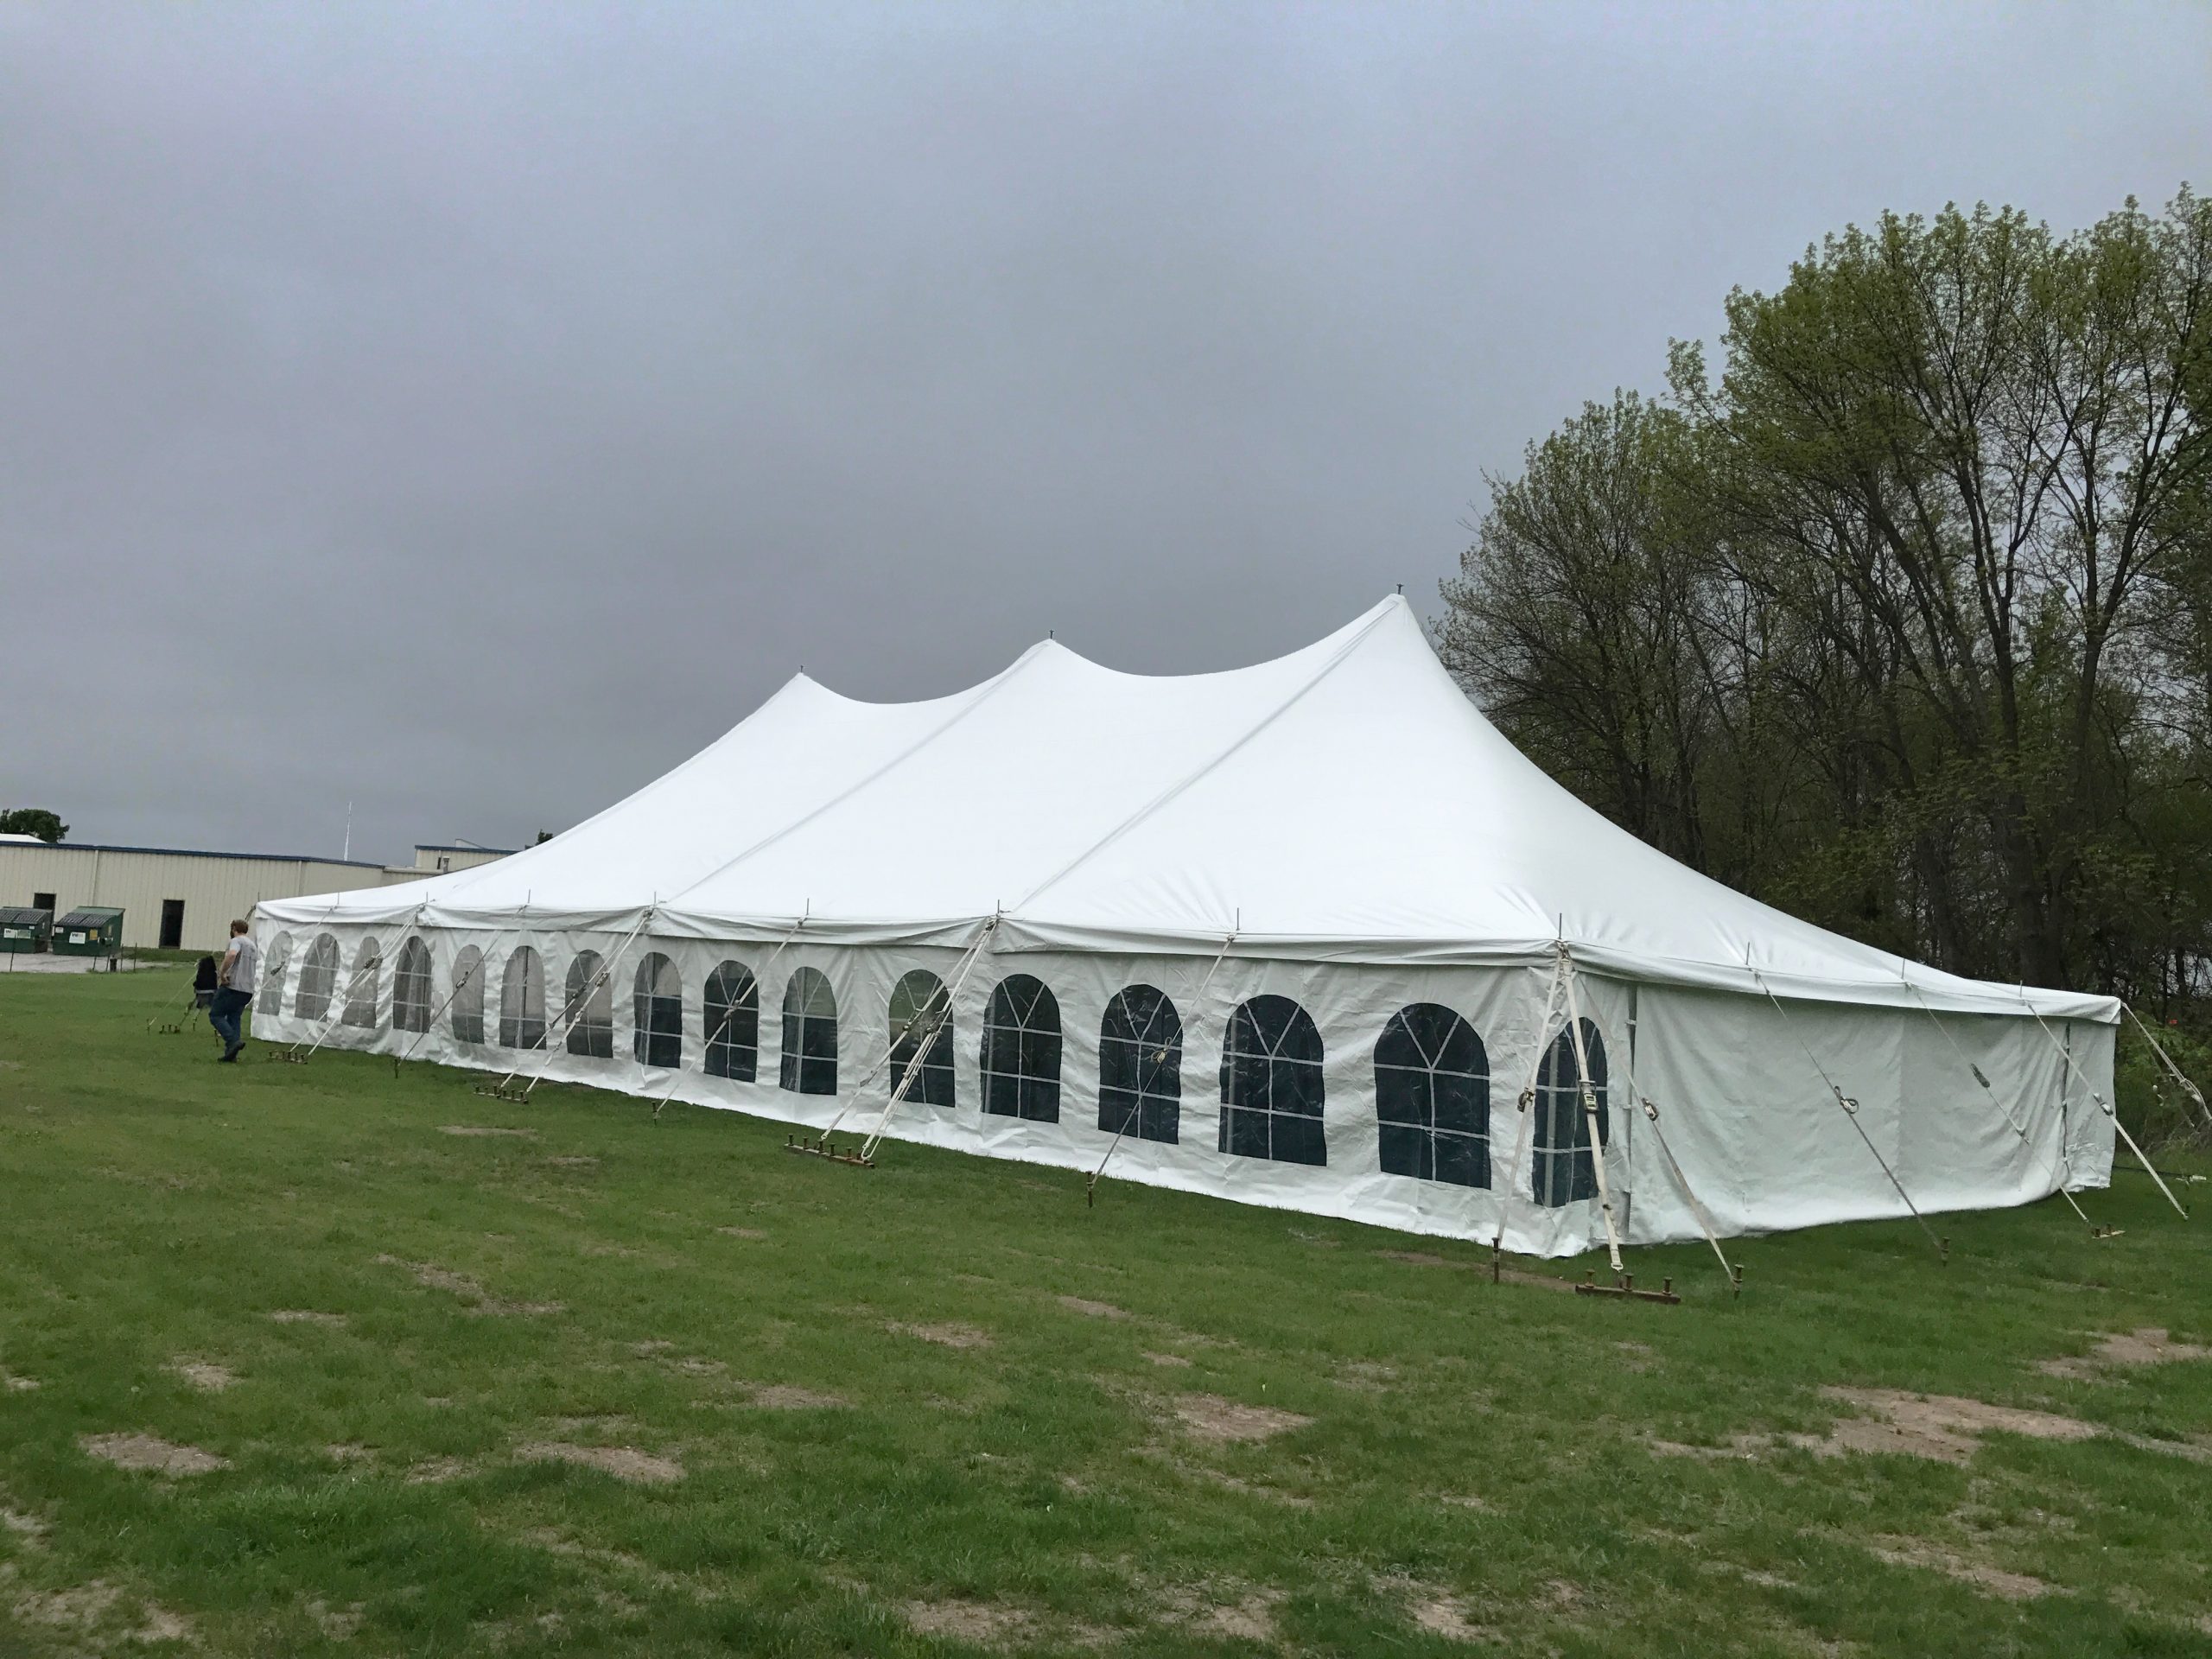 40' x 80' rope and pole tent 2707 Dubuque St Ne, North Liberty,Iowa Grace Community Church 4-26-2017